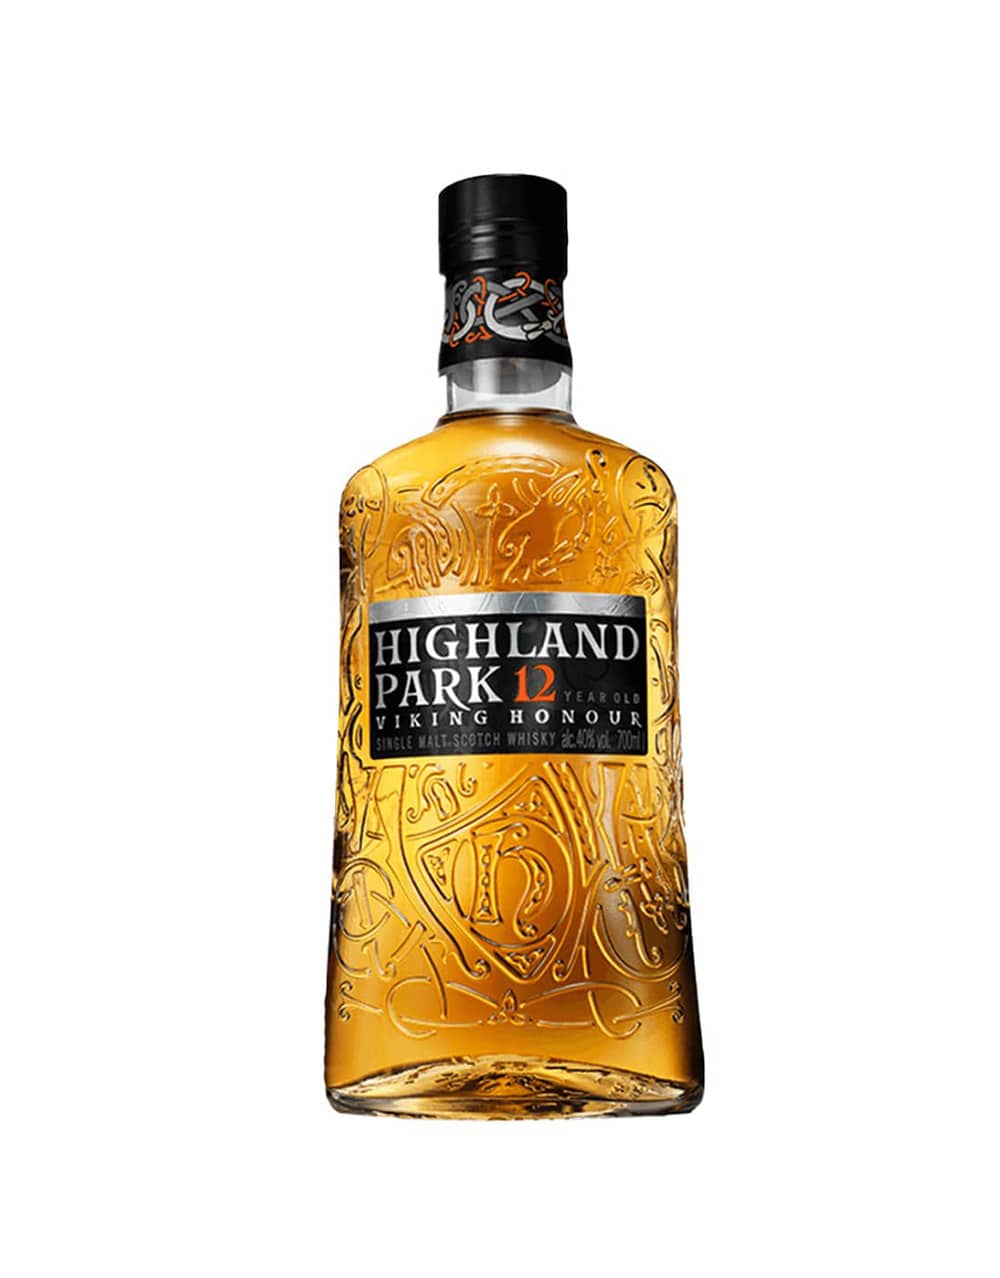 Highland Park 12 Year Old Viking Honour Single Malt Scotch whisky